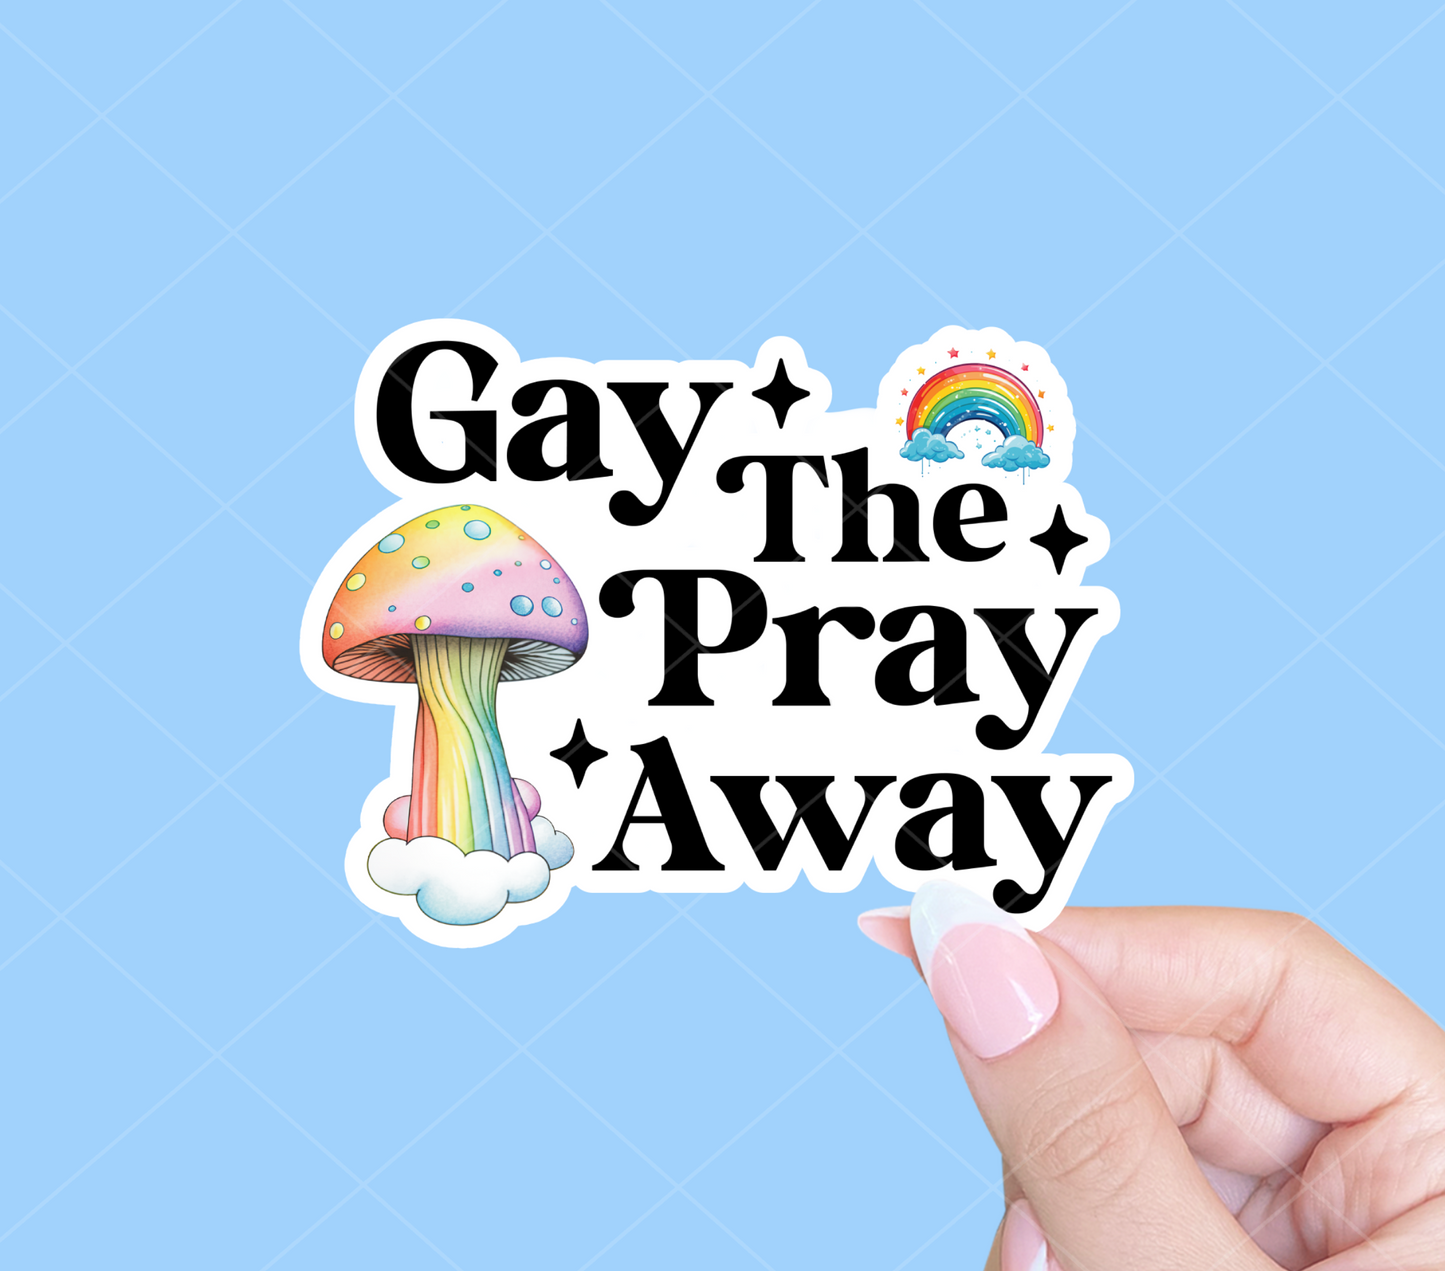 Gay the pray away